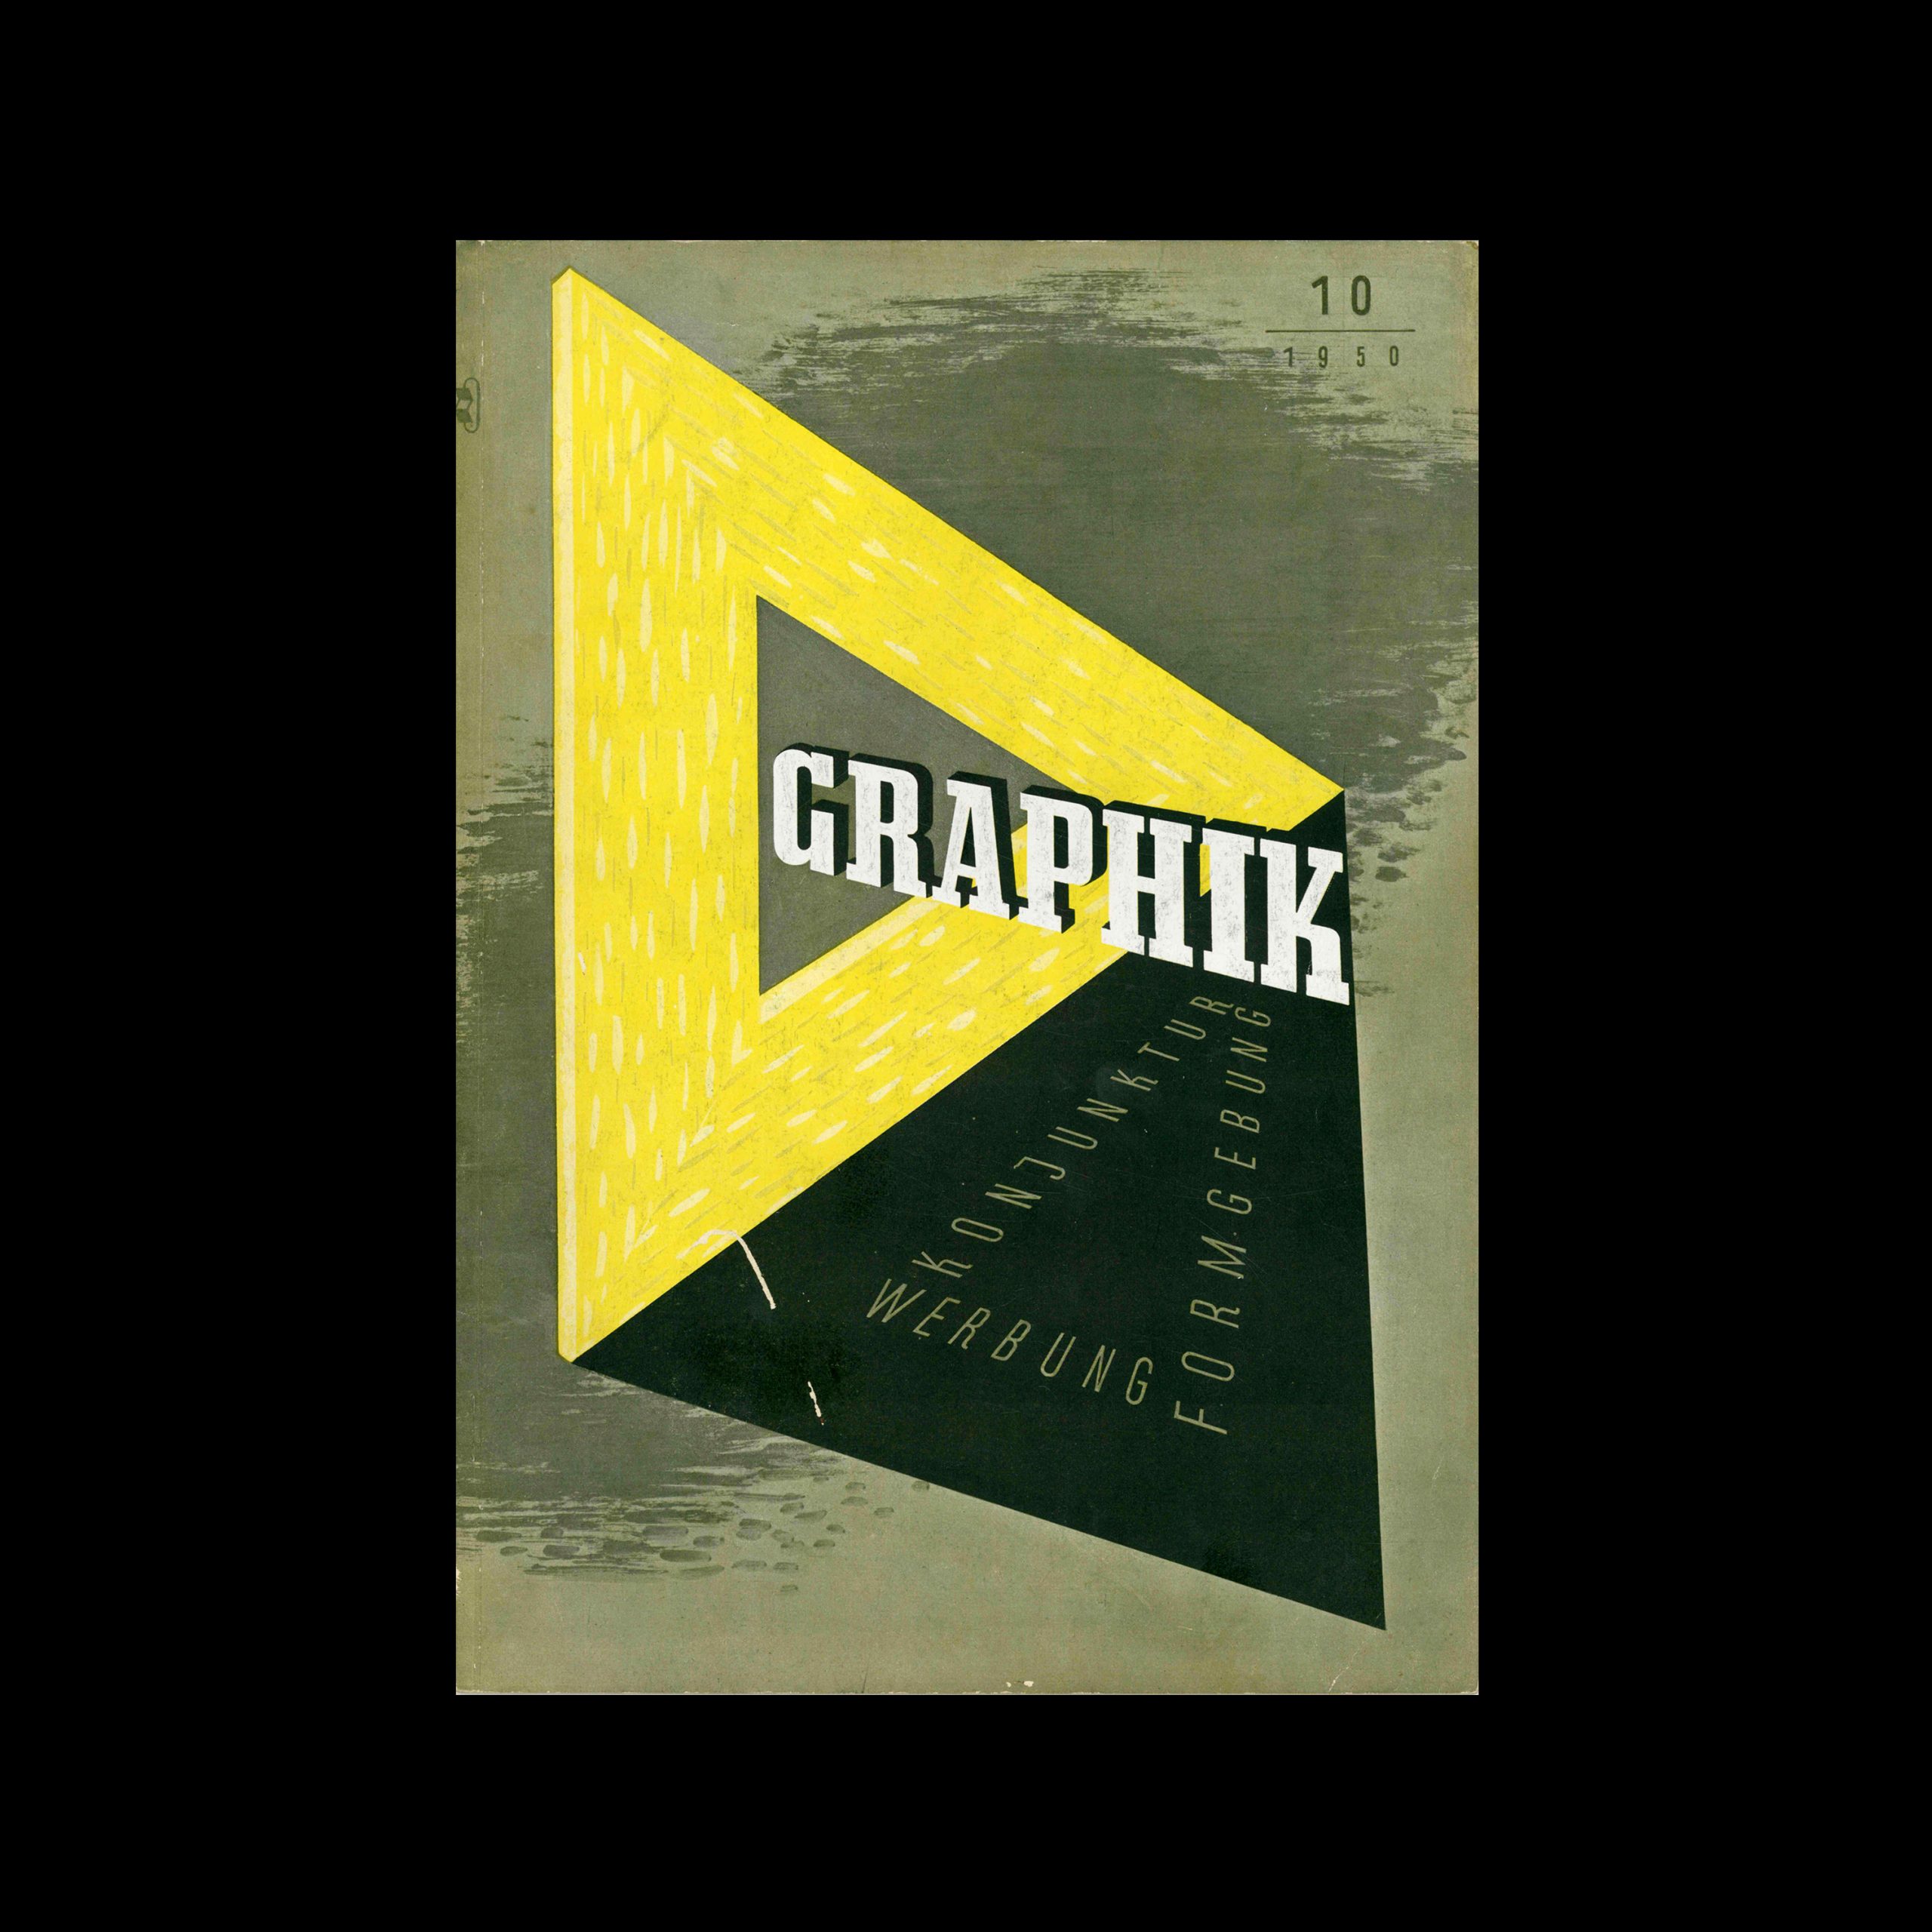 Graphik – Werbung + Formgebung, 10, 1950